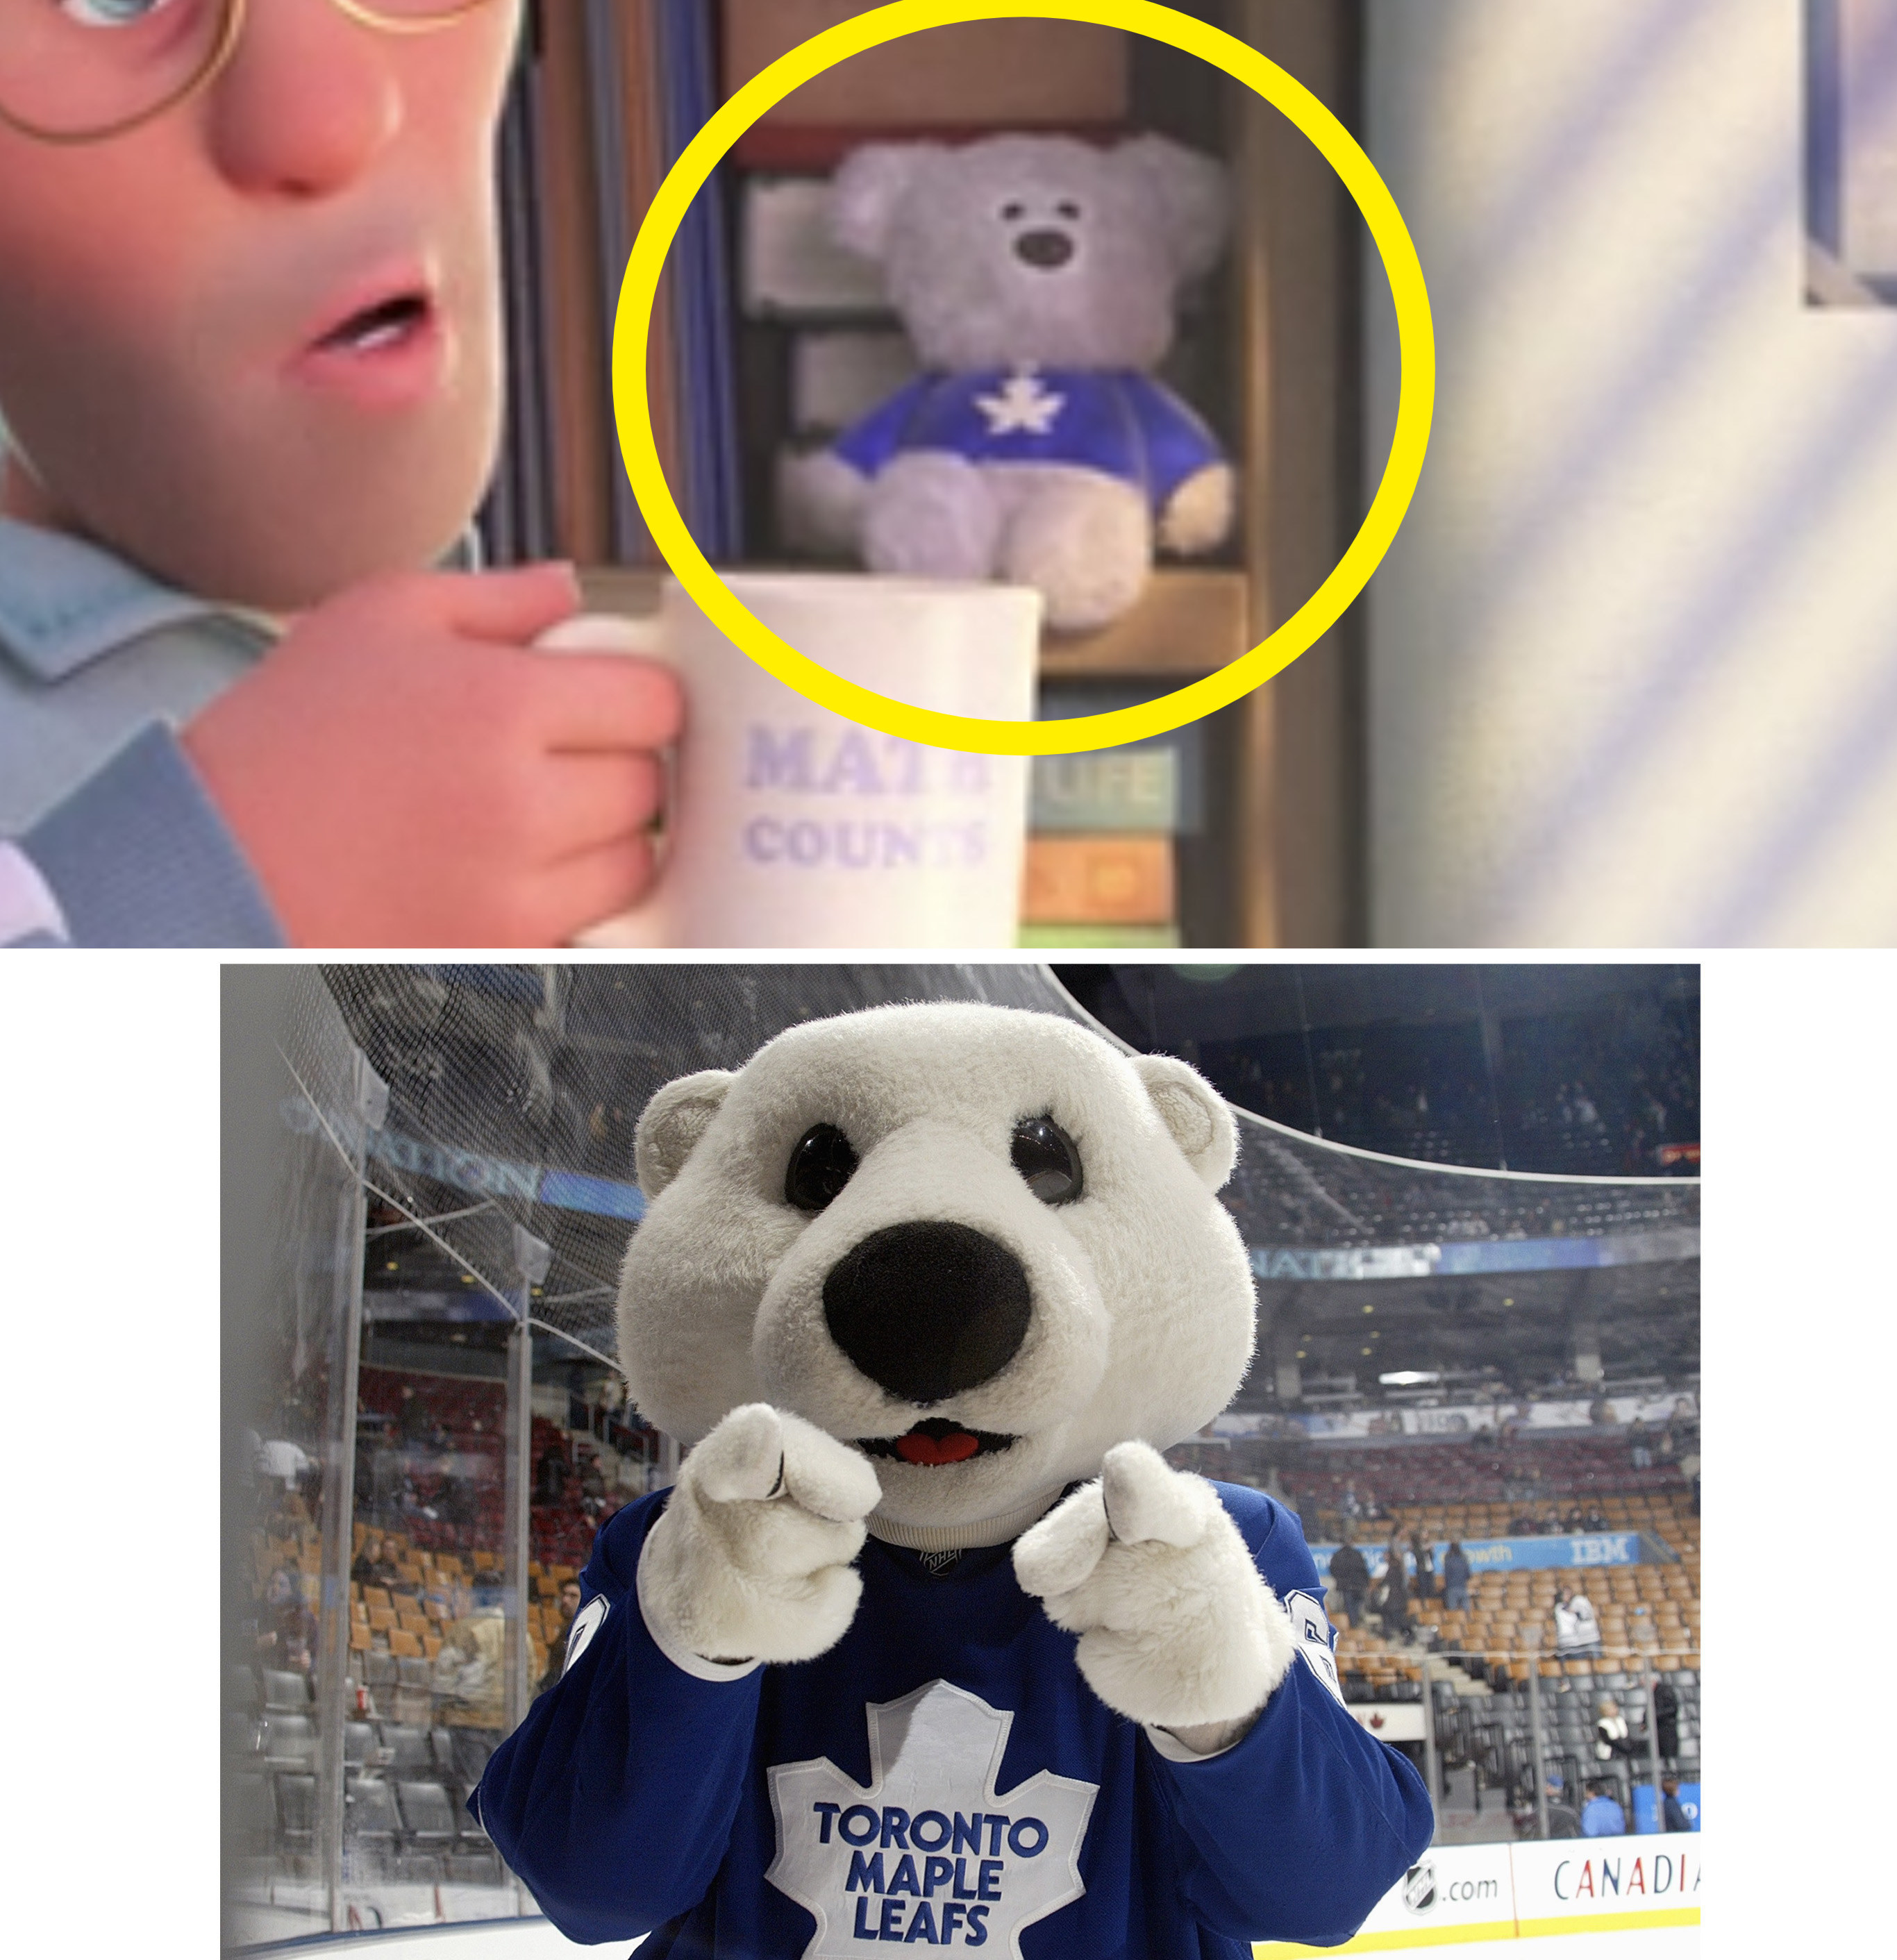 A stuffed animal bear wearing a blue hockey jersey